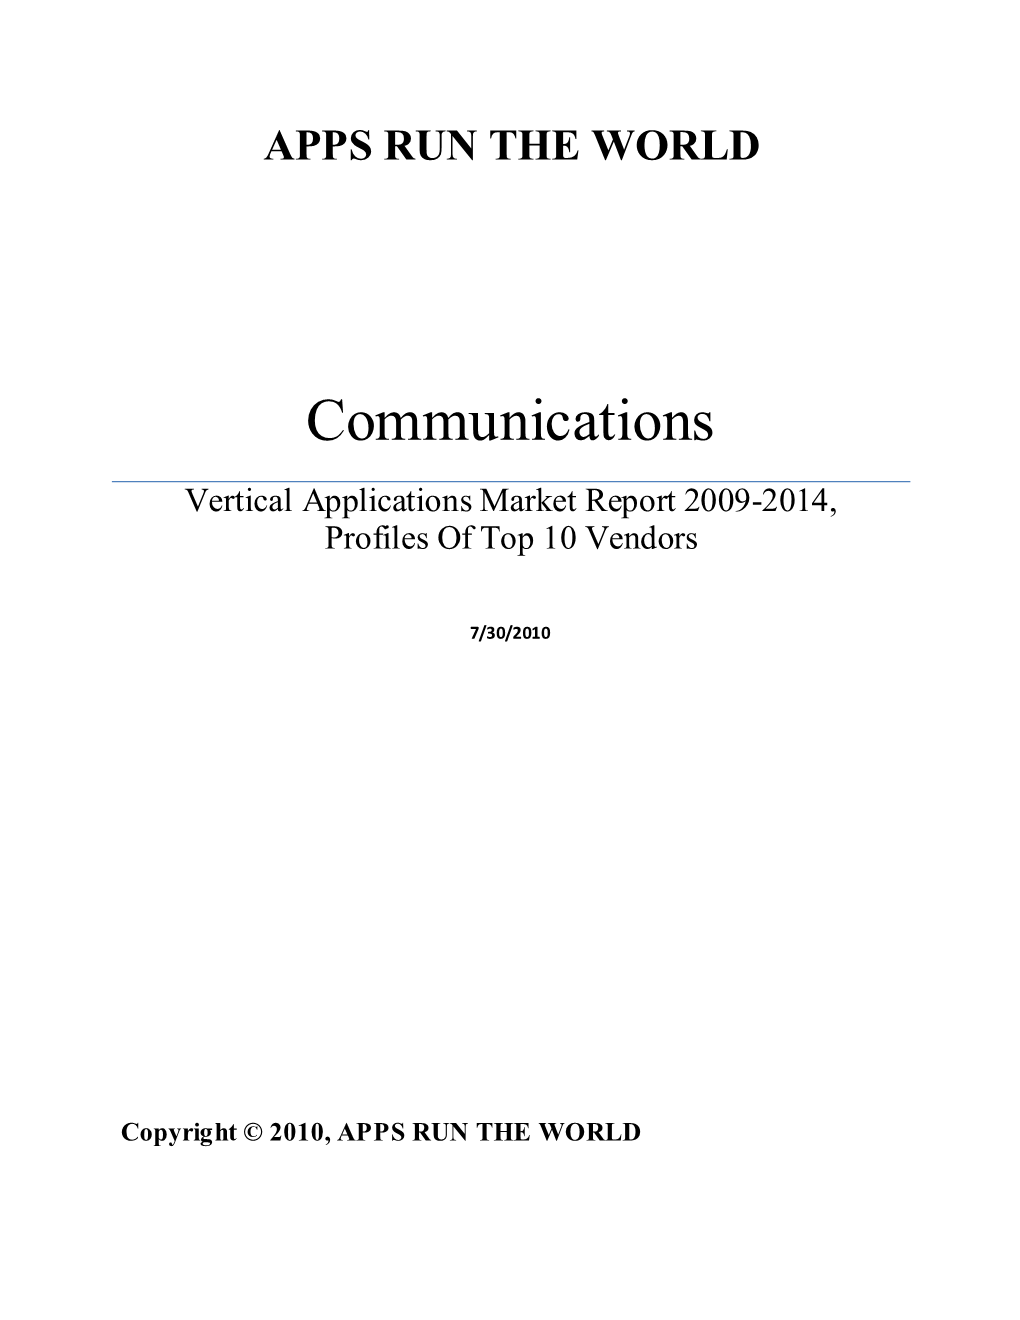 Communications Market Report 2009-2014